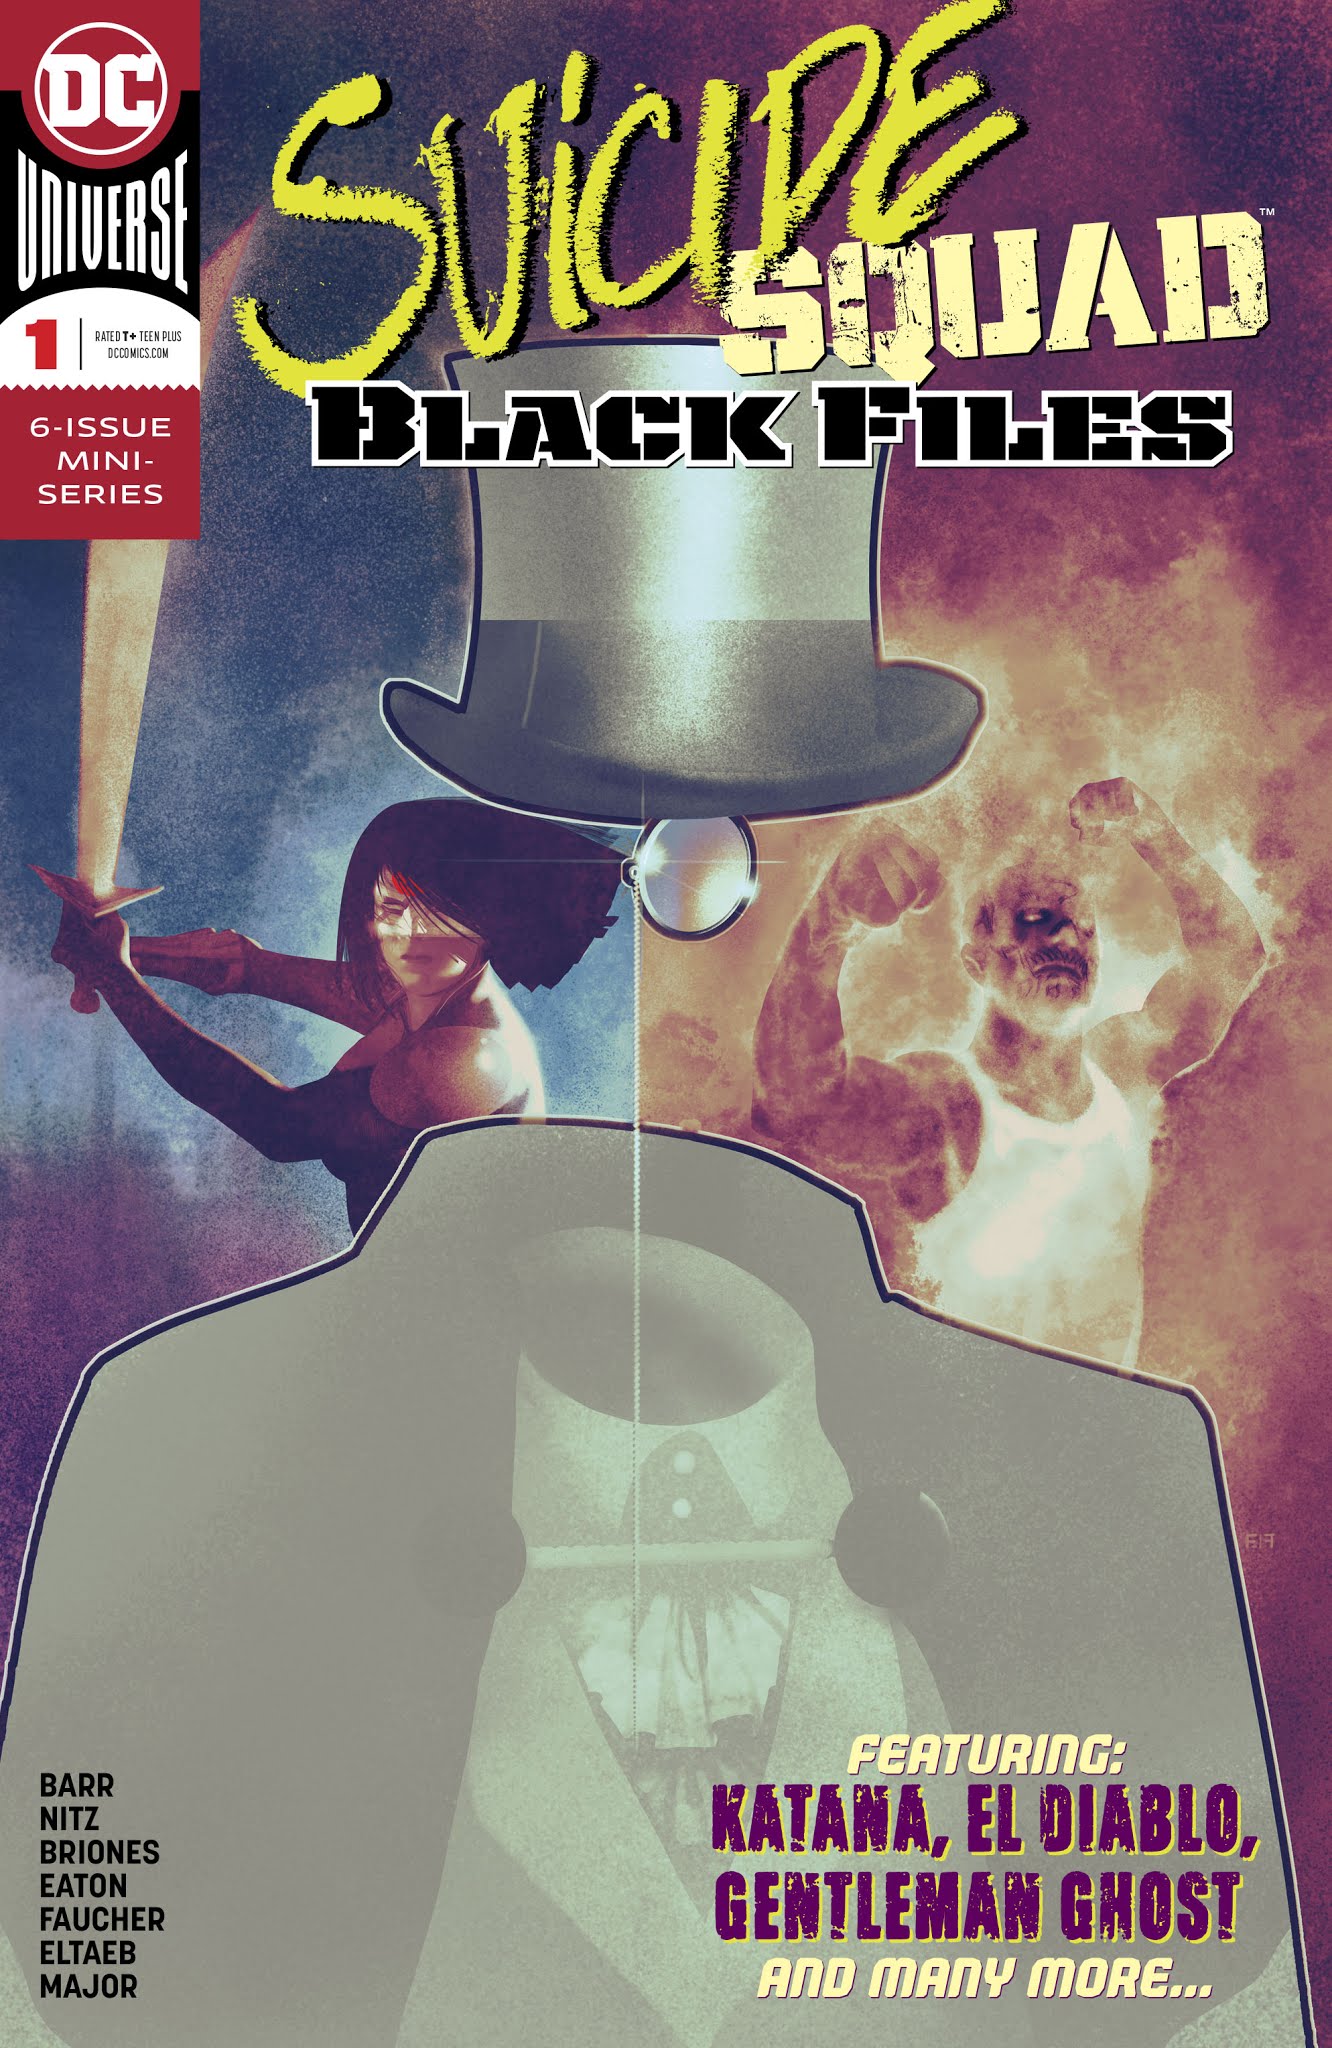 Read online Suicide Squad Black Files comic -  Issue #1 - 1